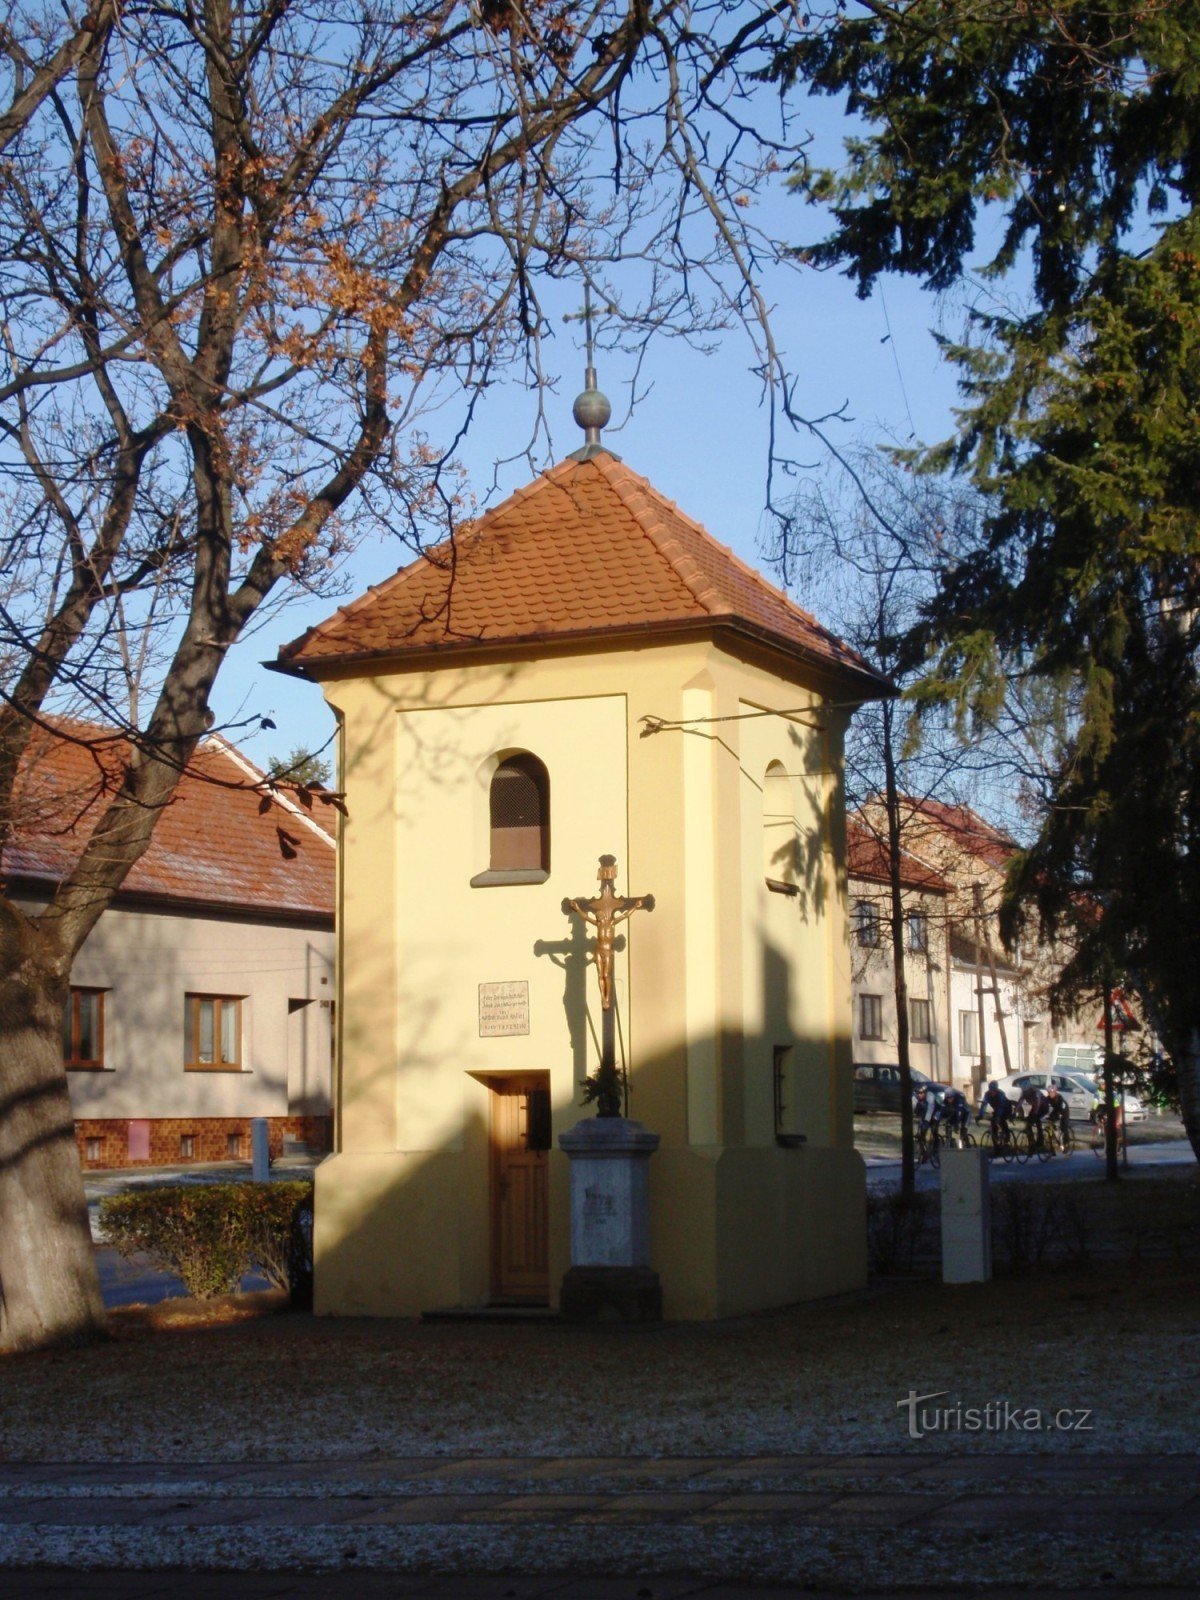 Kobylnice の村の教会のモニュメント